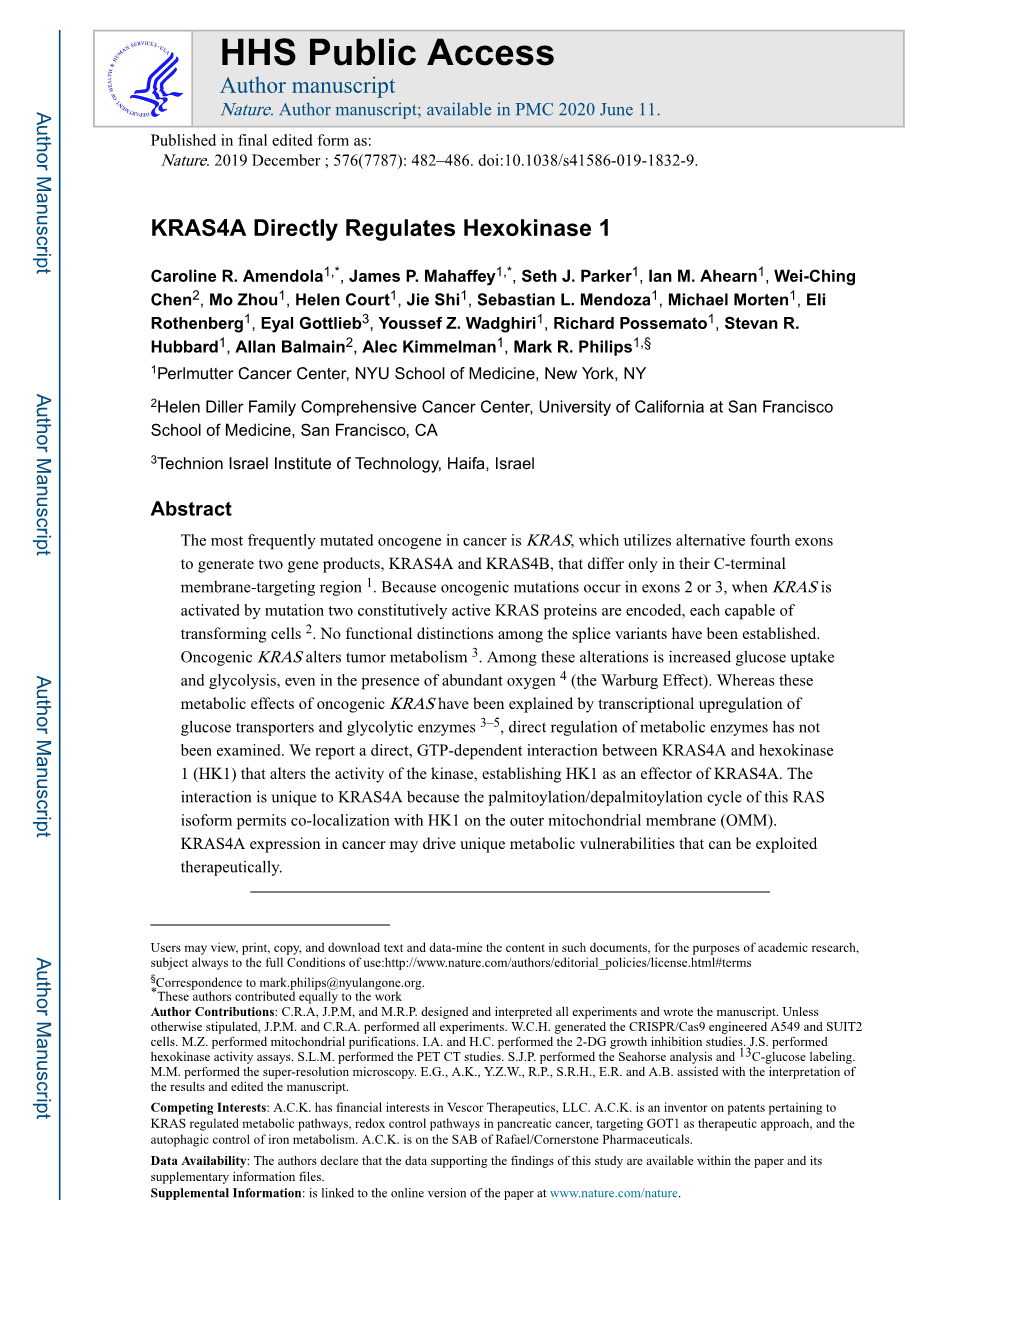 KRAS4A Directly Regulates Hexokinase 1